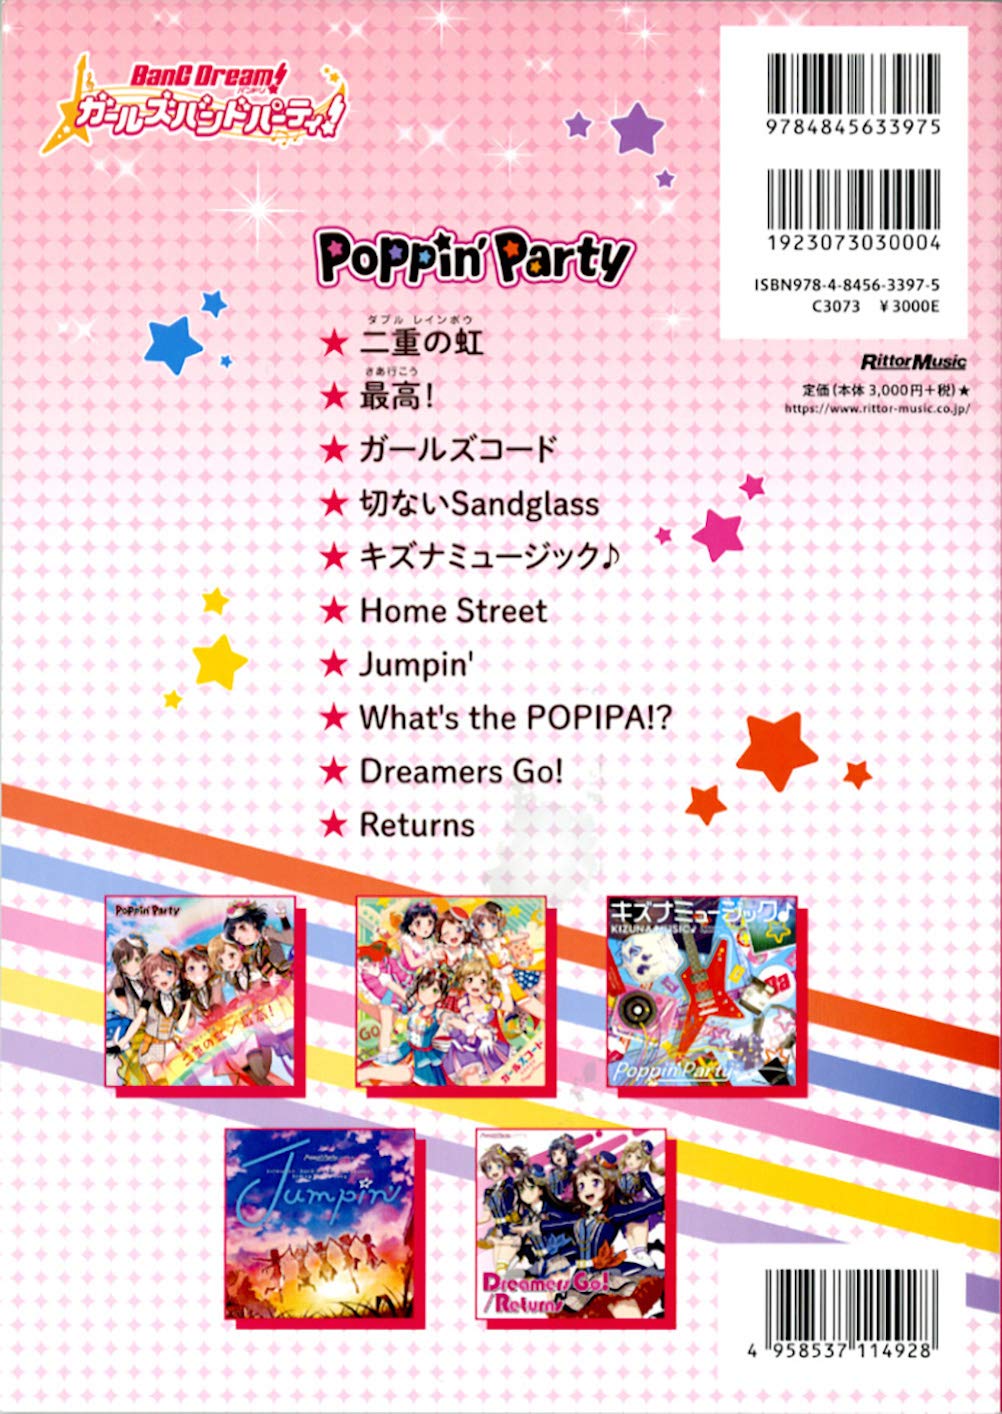 BanG Dreams! Official Band Score Poppin'Party Vol.3